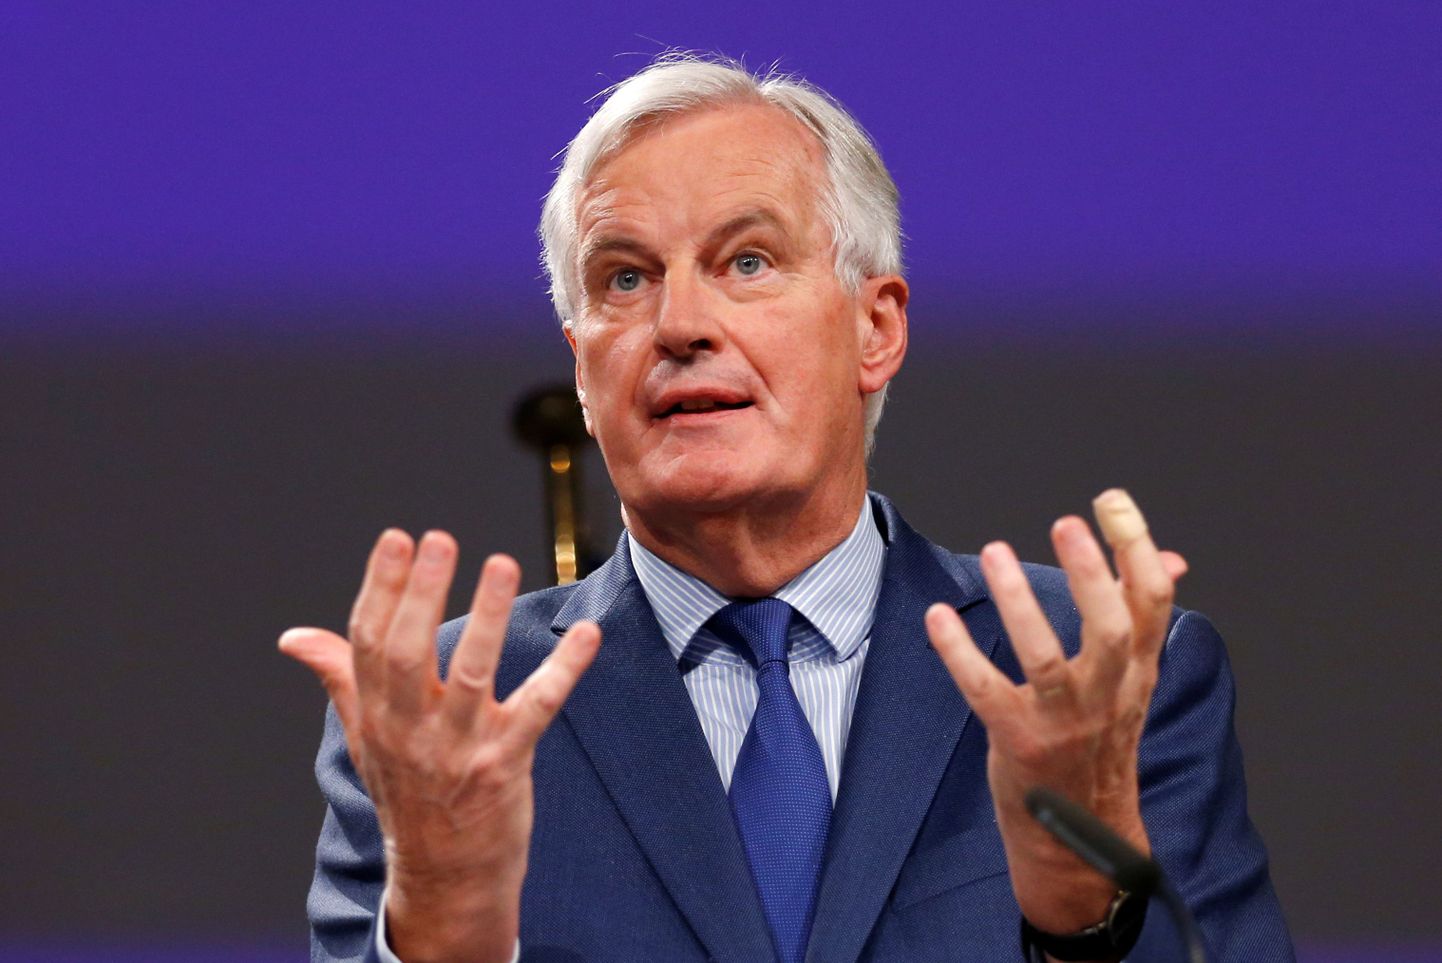 Michel Barnier.